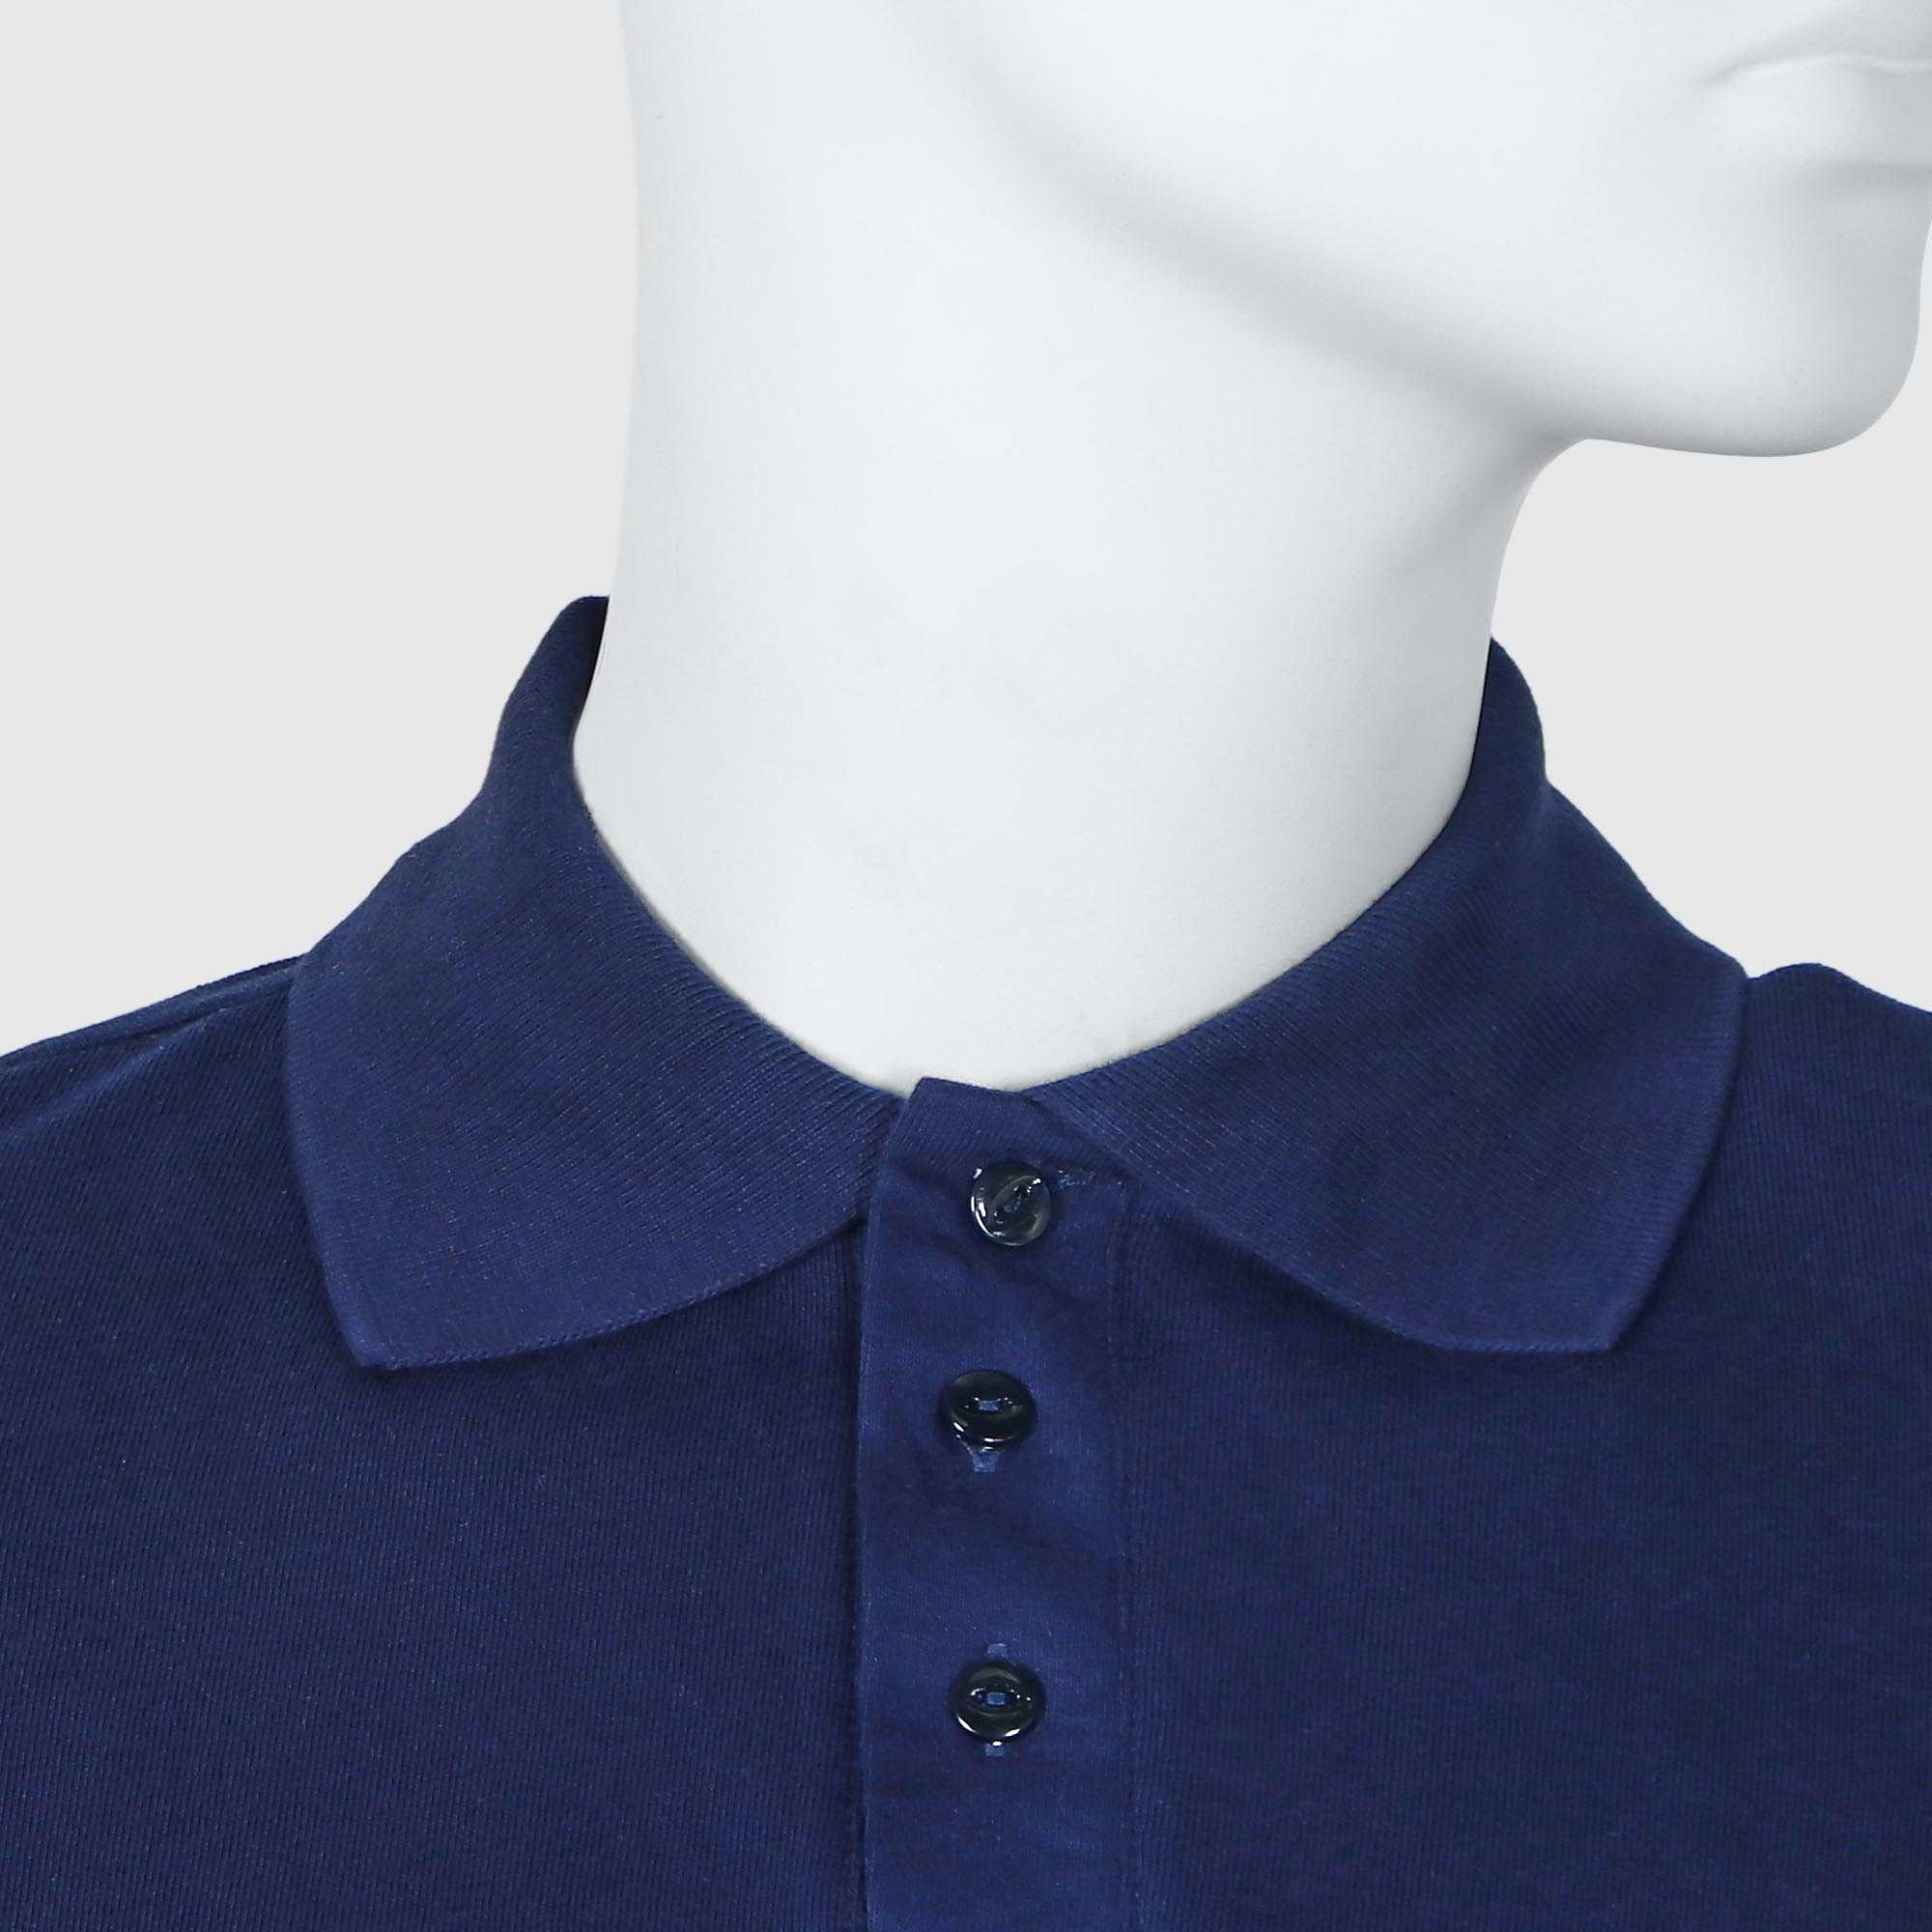 Мужская футболка-поло Diva Teks синяя (DTD-10), цвет синий, размер 48-50 - фото 4